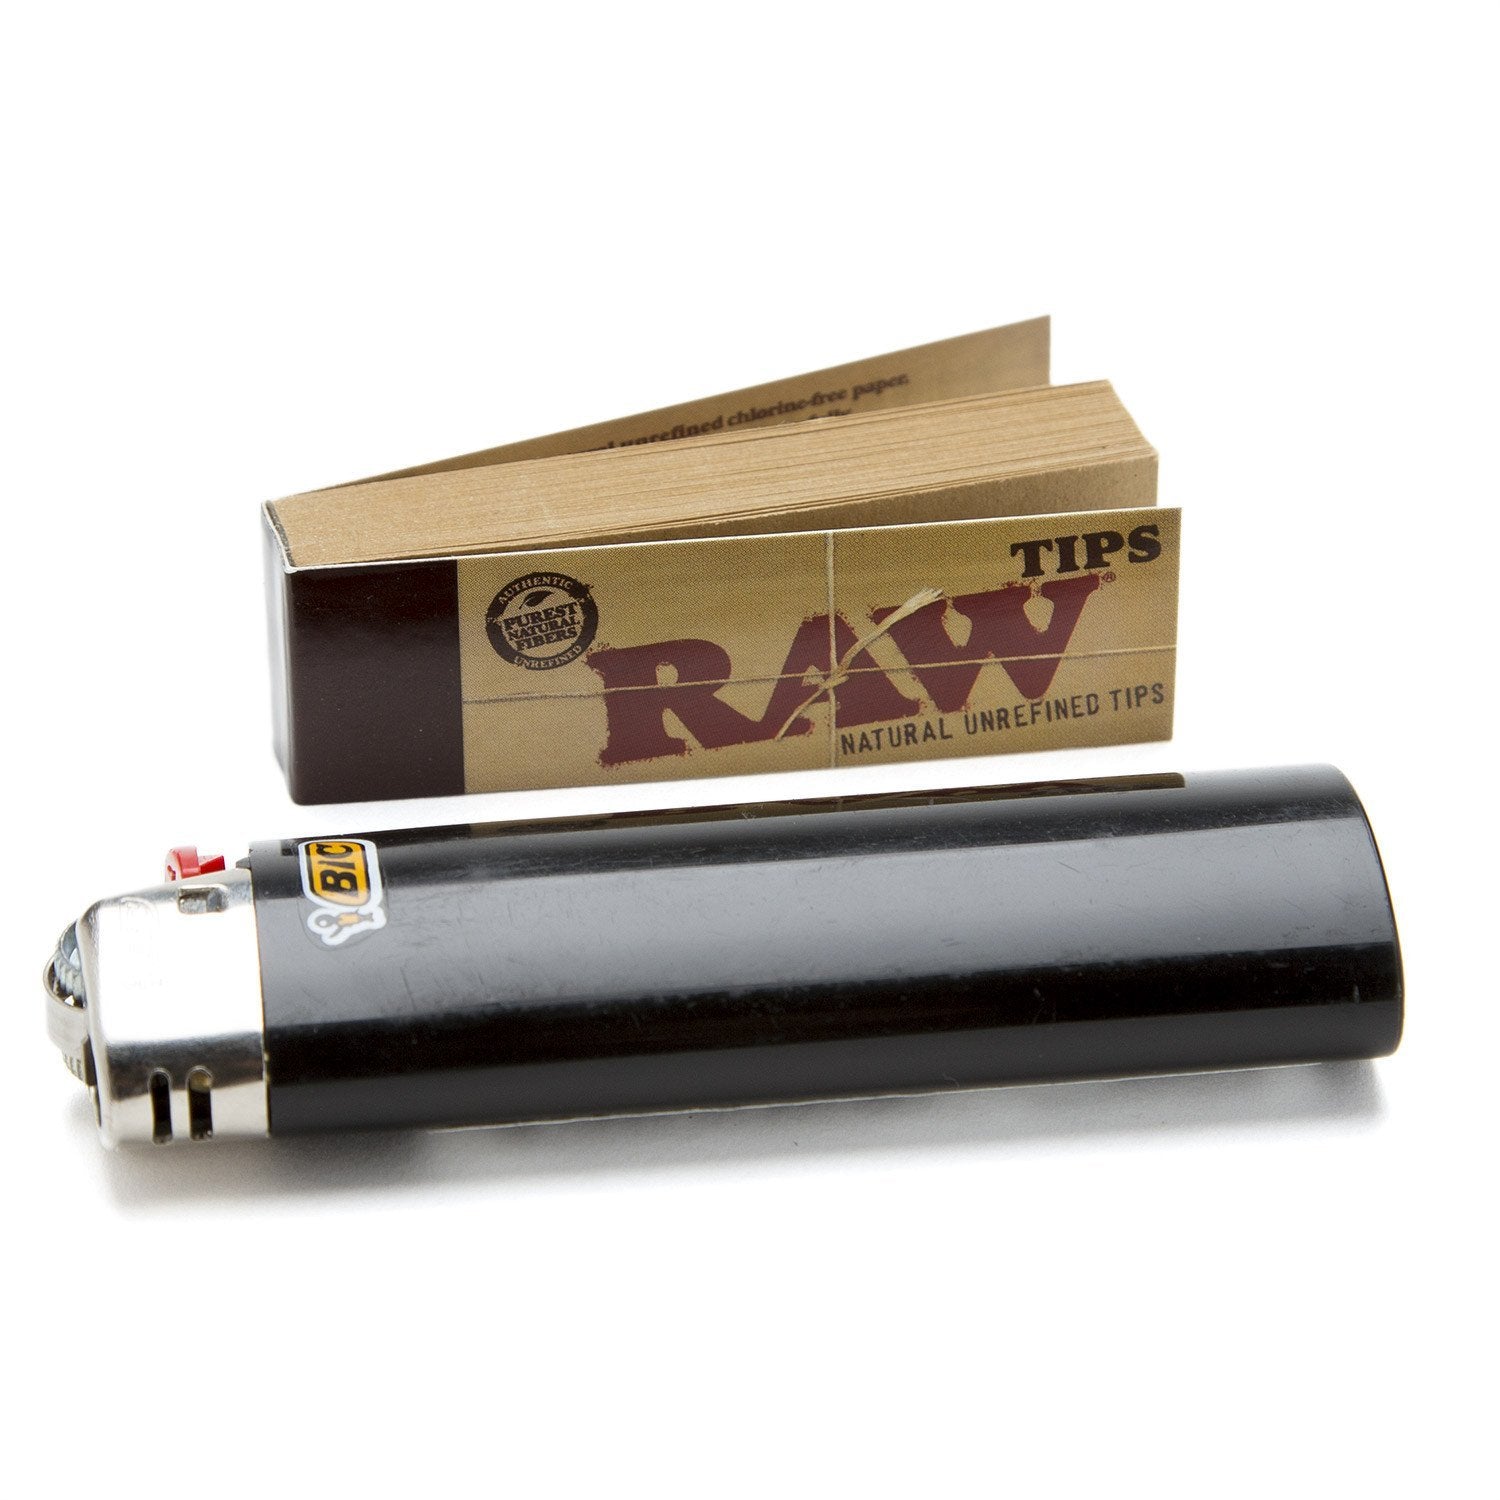 RAW Natural Original Rolling Paper Tips 50/Box